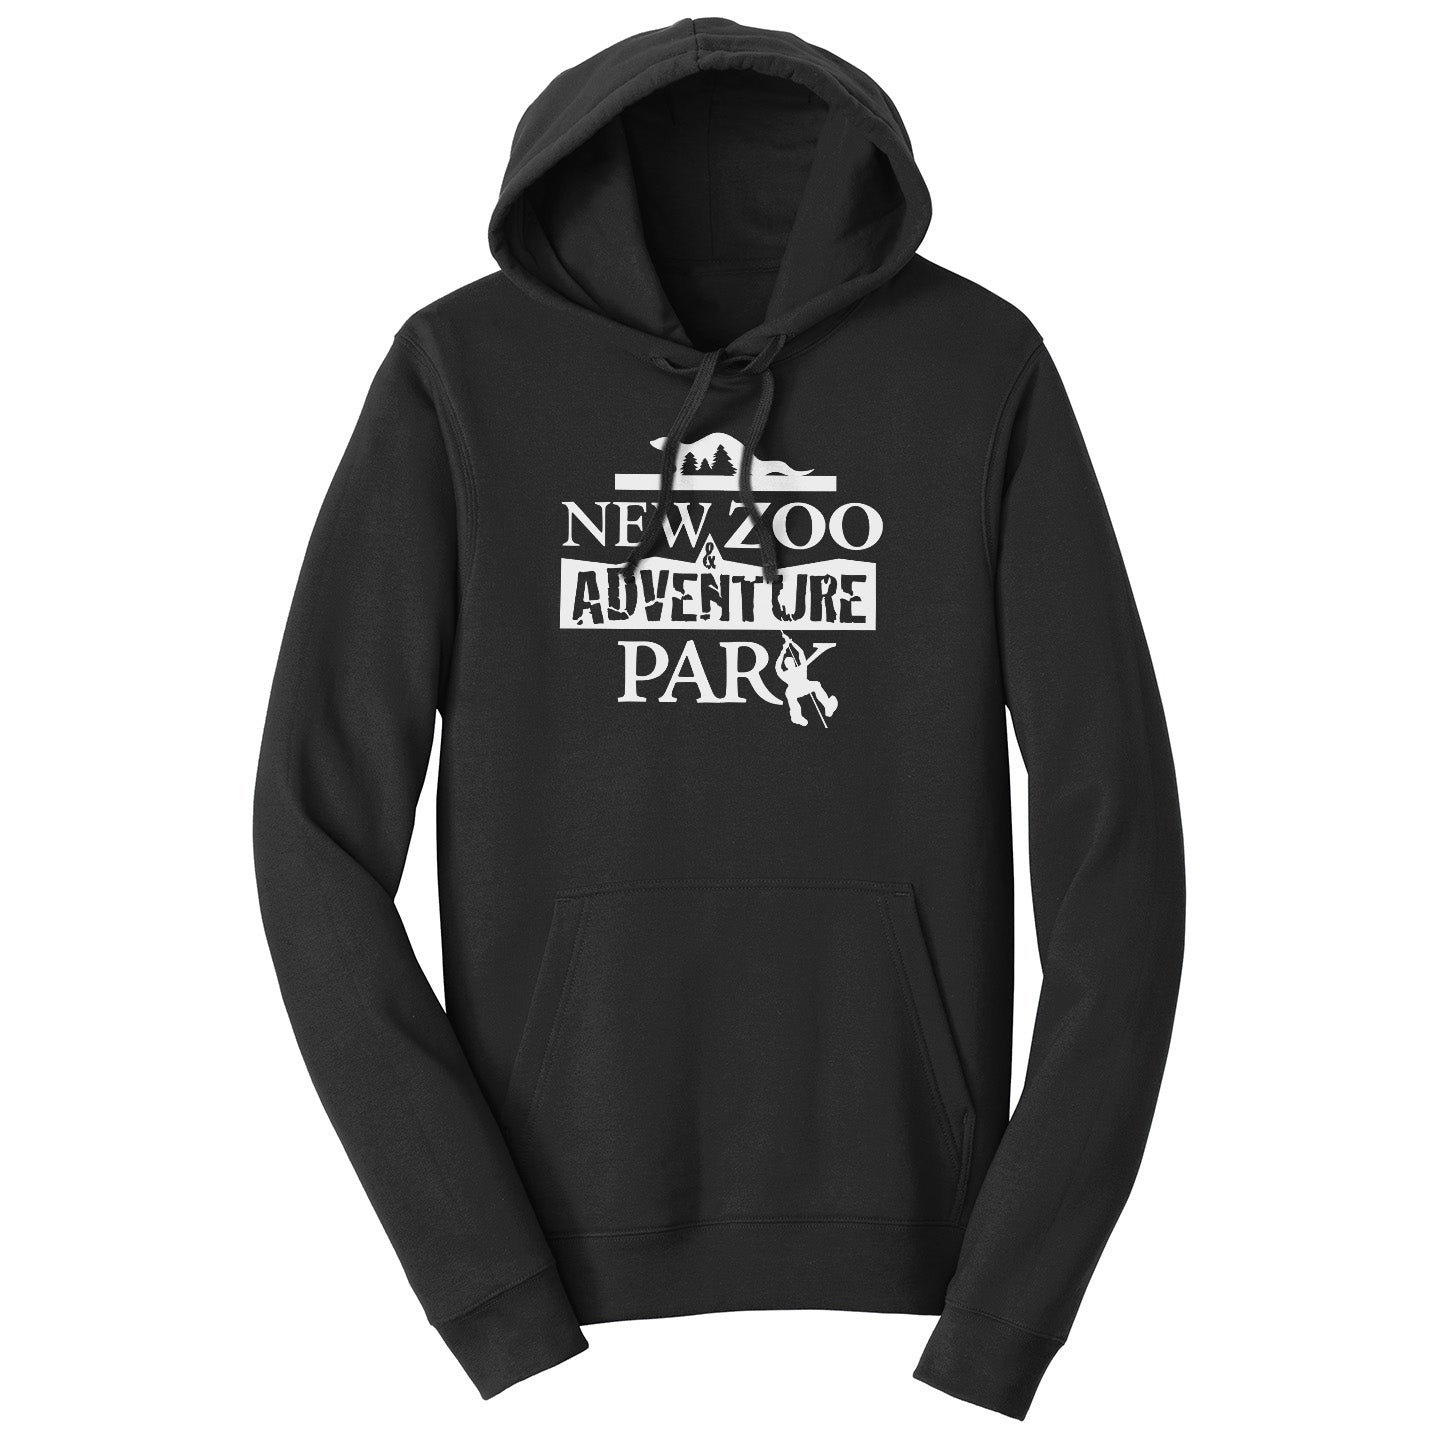 NEW Zoo & Adventure Park - Black & White Logo - Adult Unisex Hoodie Sweatshirt